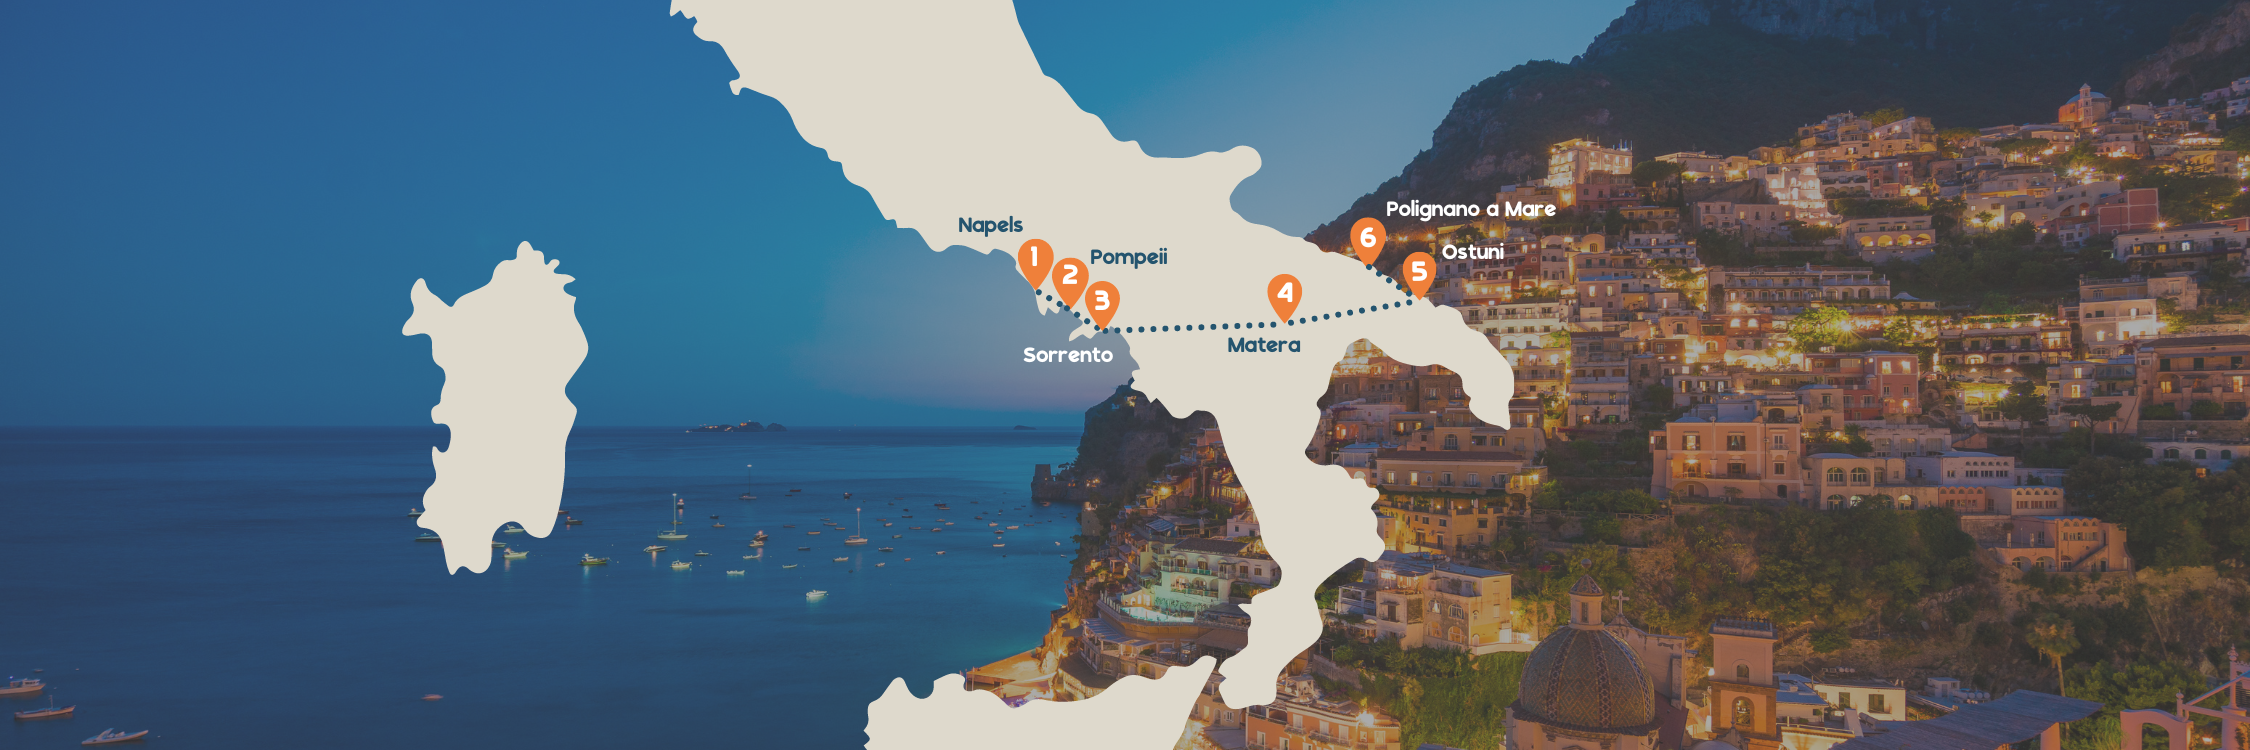 Zuid-Italië kaart